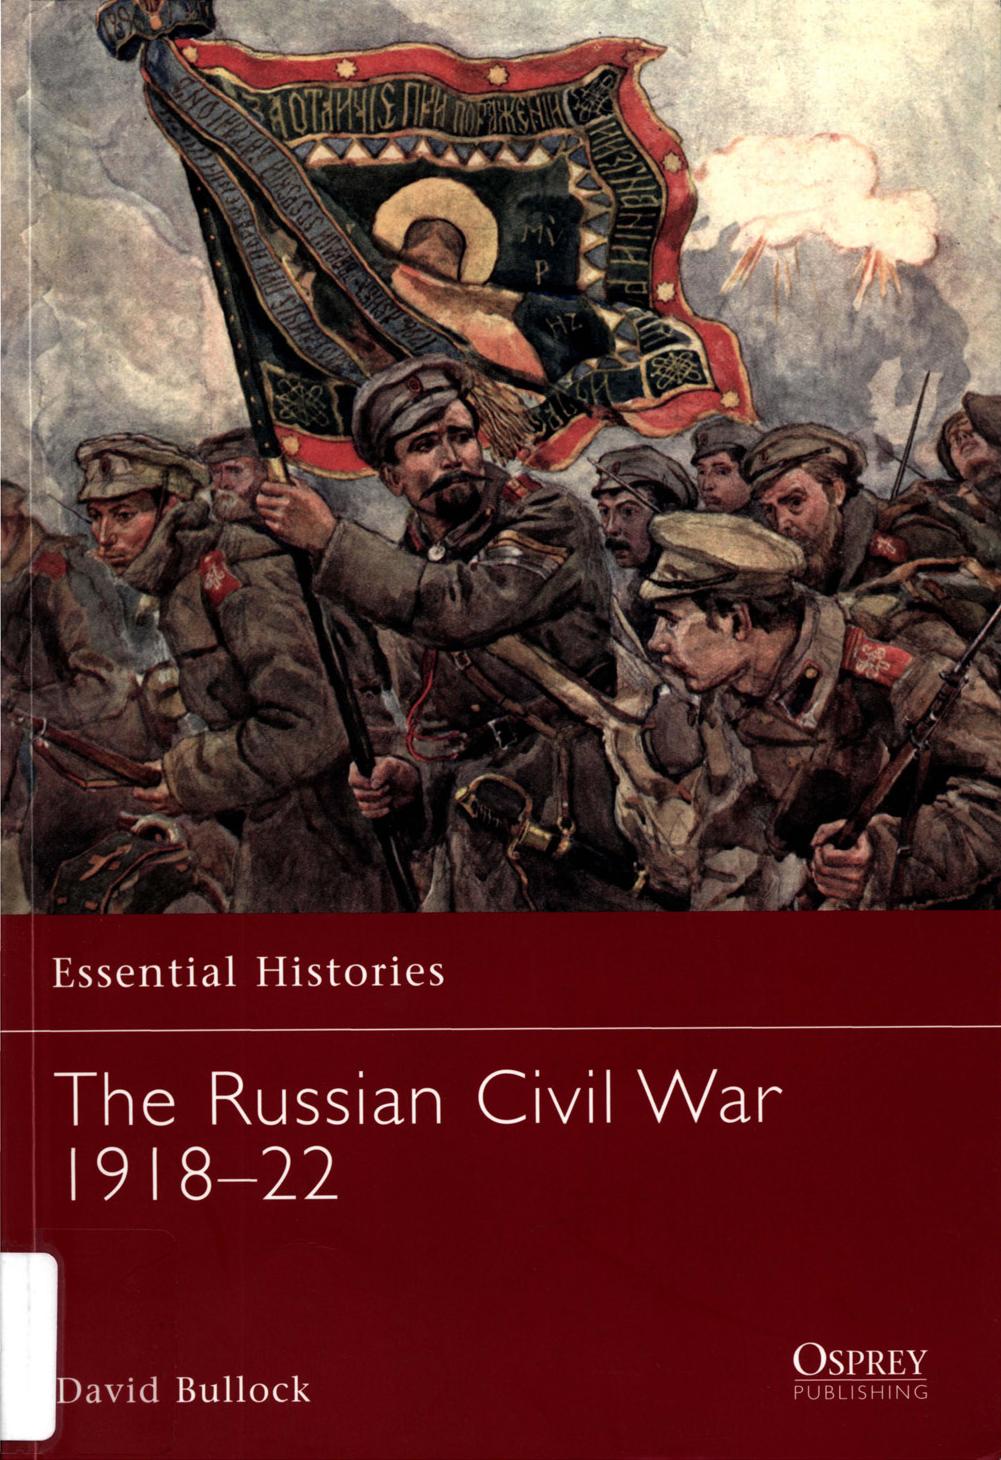 The Russian Civil War 1918-22 by David Bullock